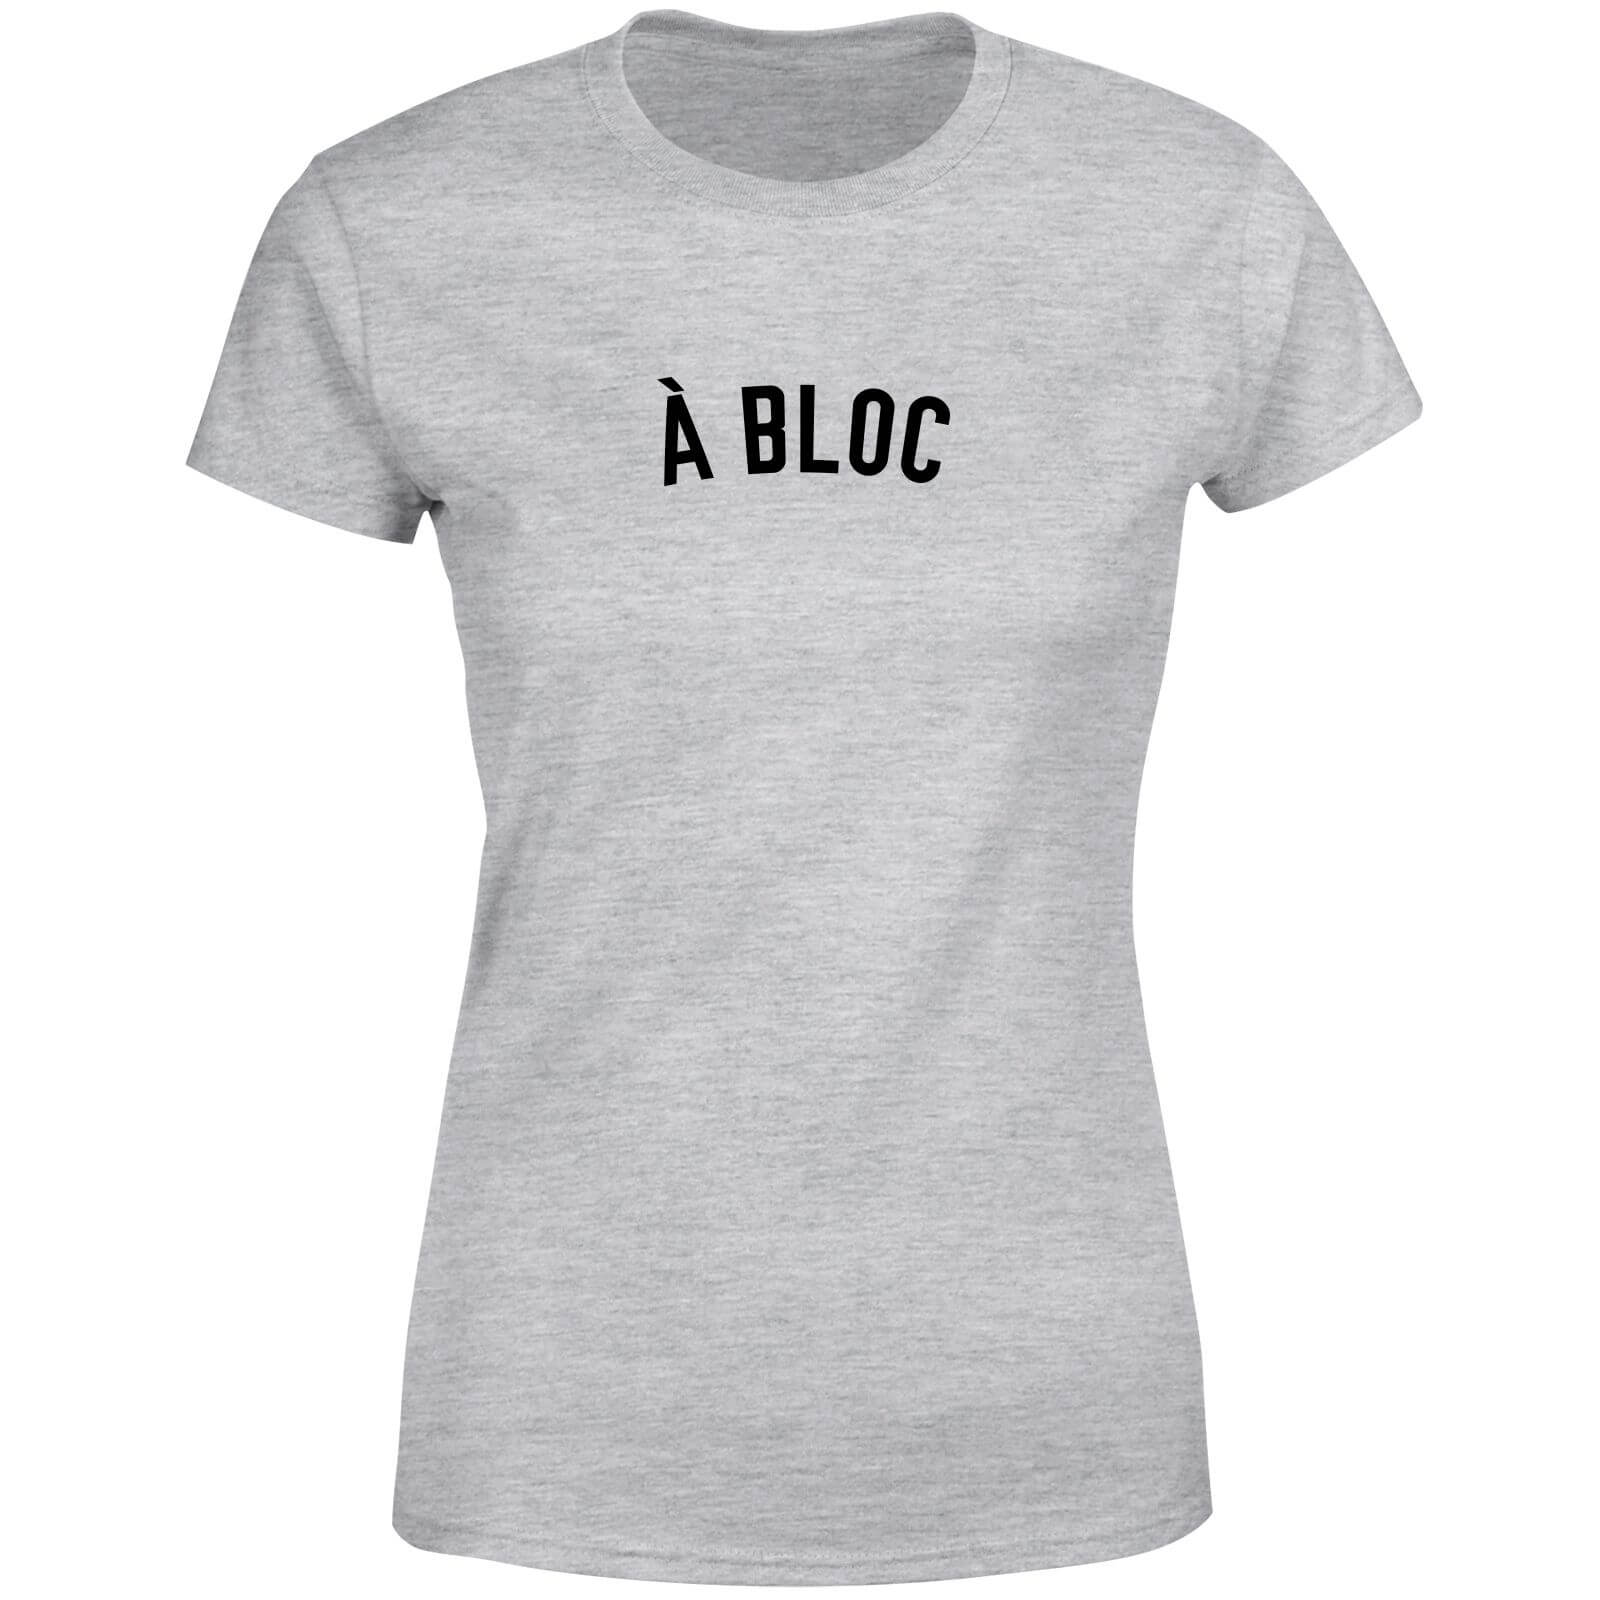 A Bloc Women's T-Shirt - Grey - XXL - Grey